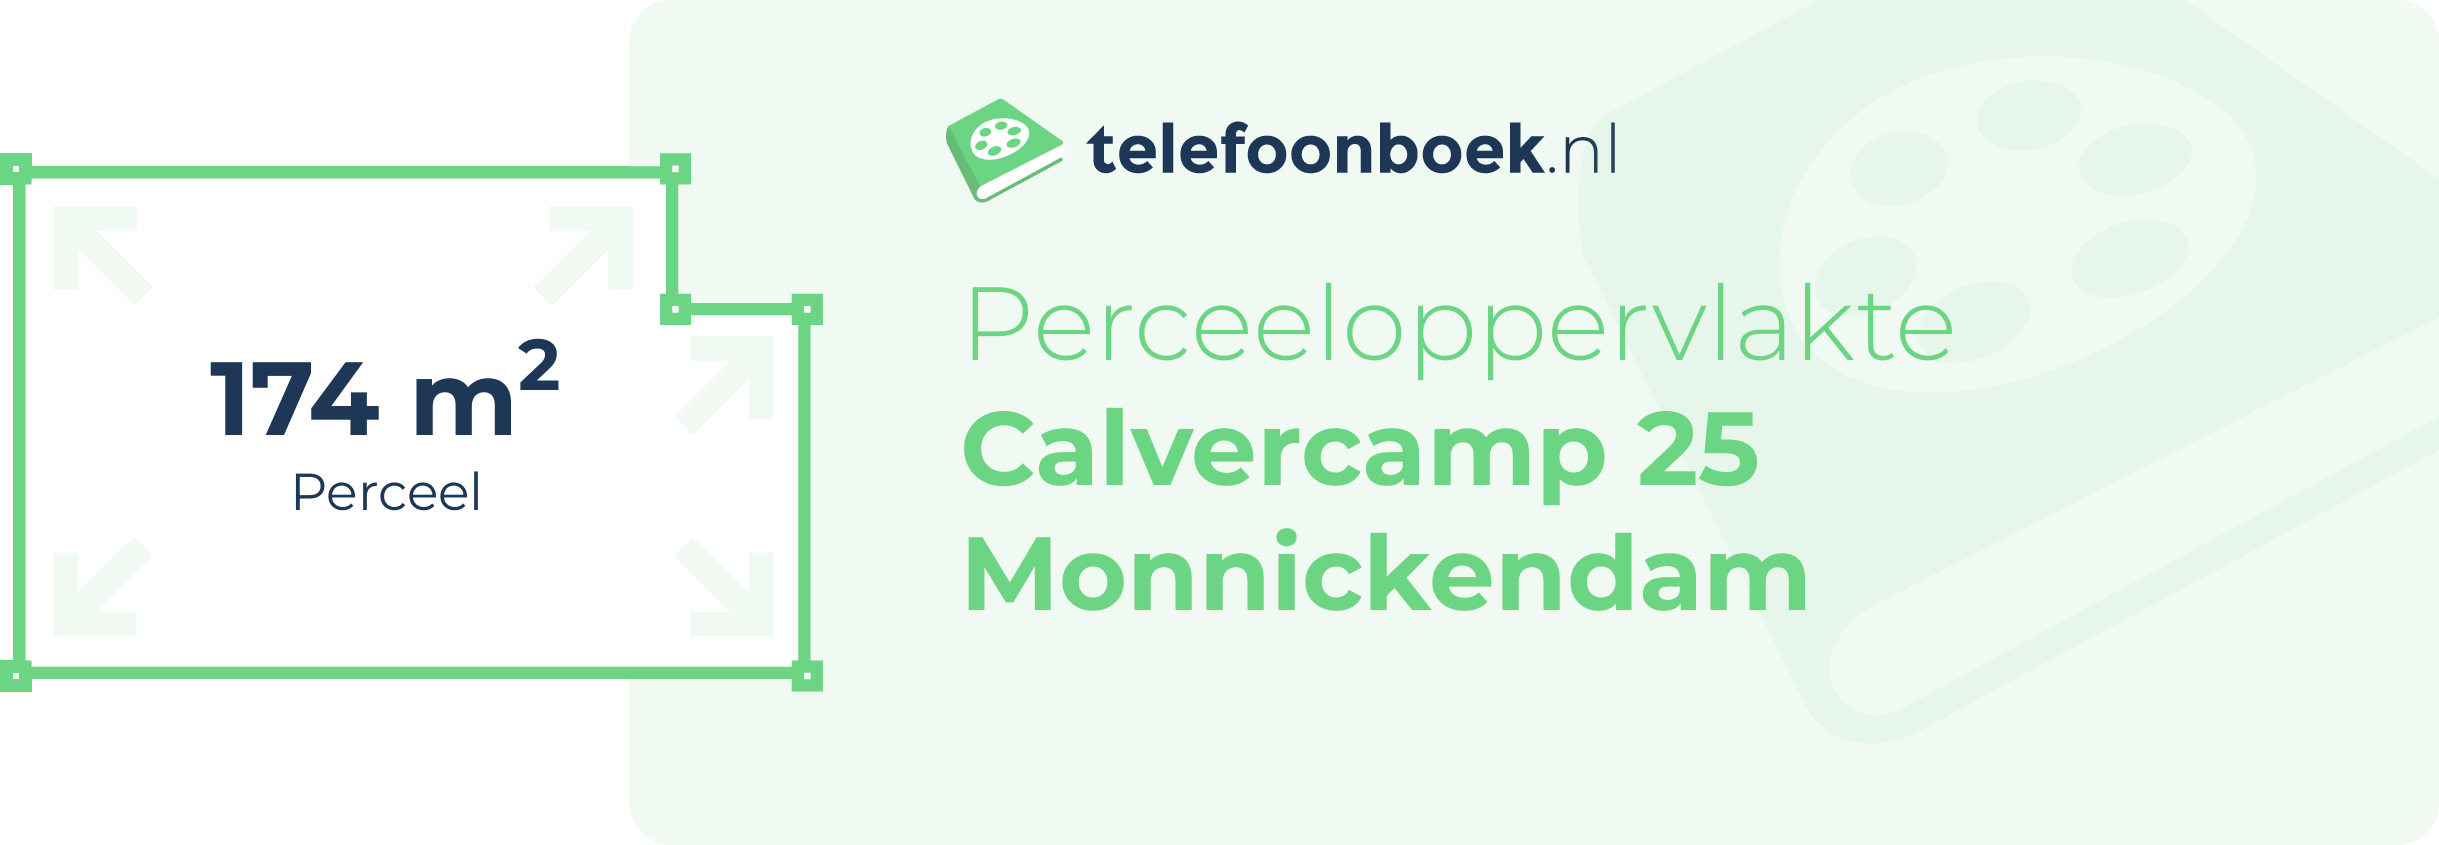 Perceeloppervlakte Calvercamp 25 Monnickendam